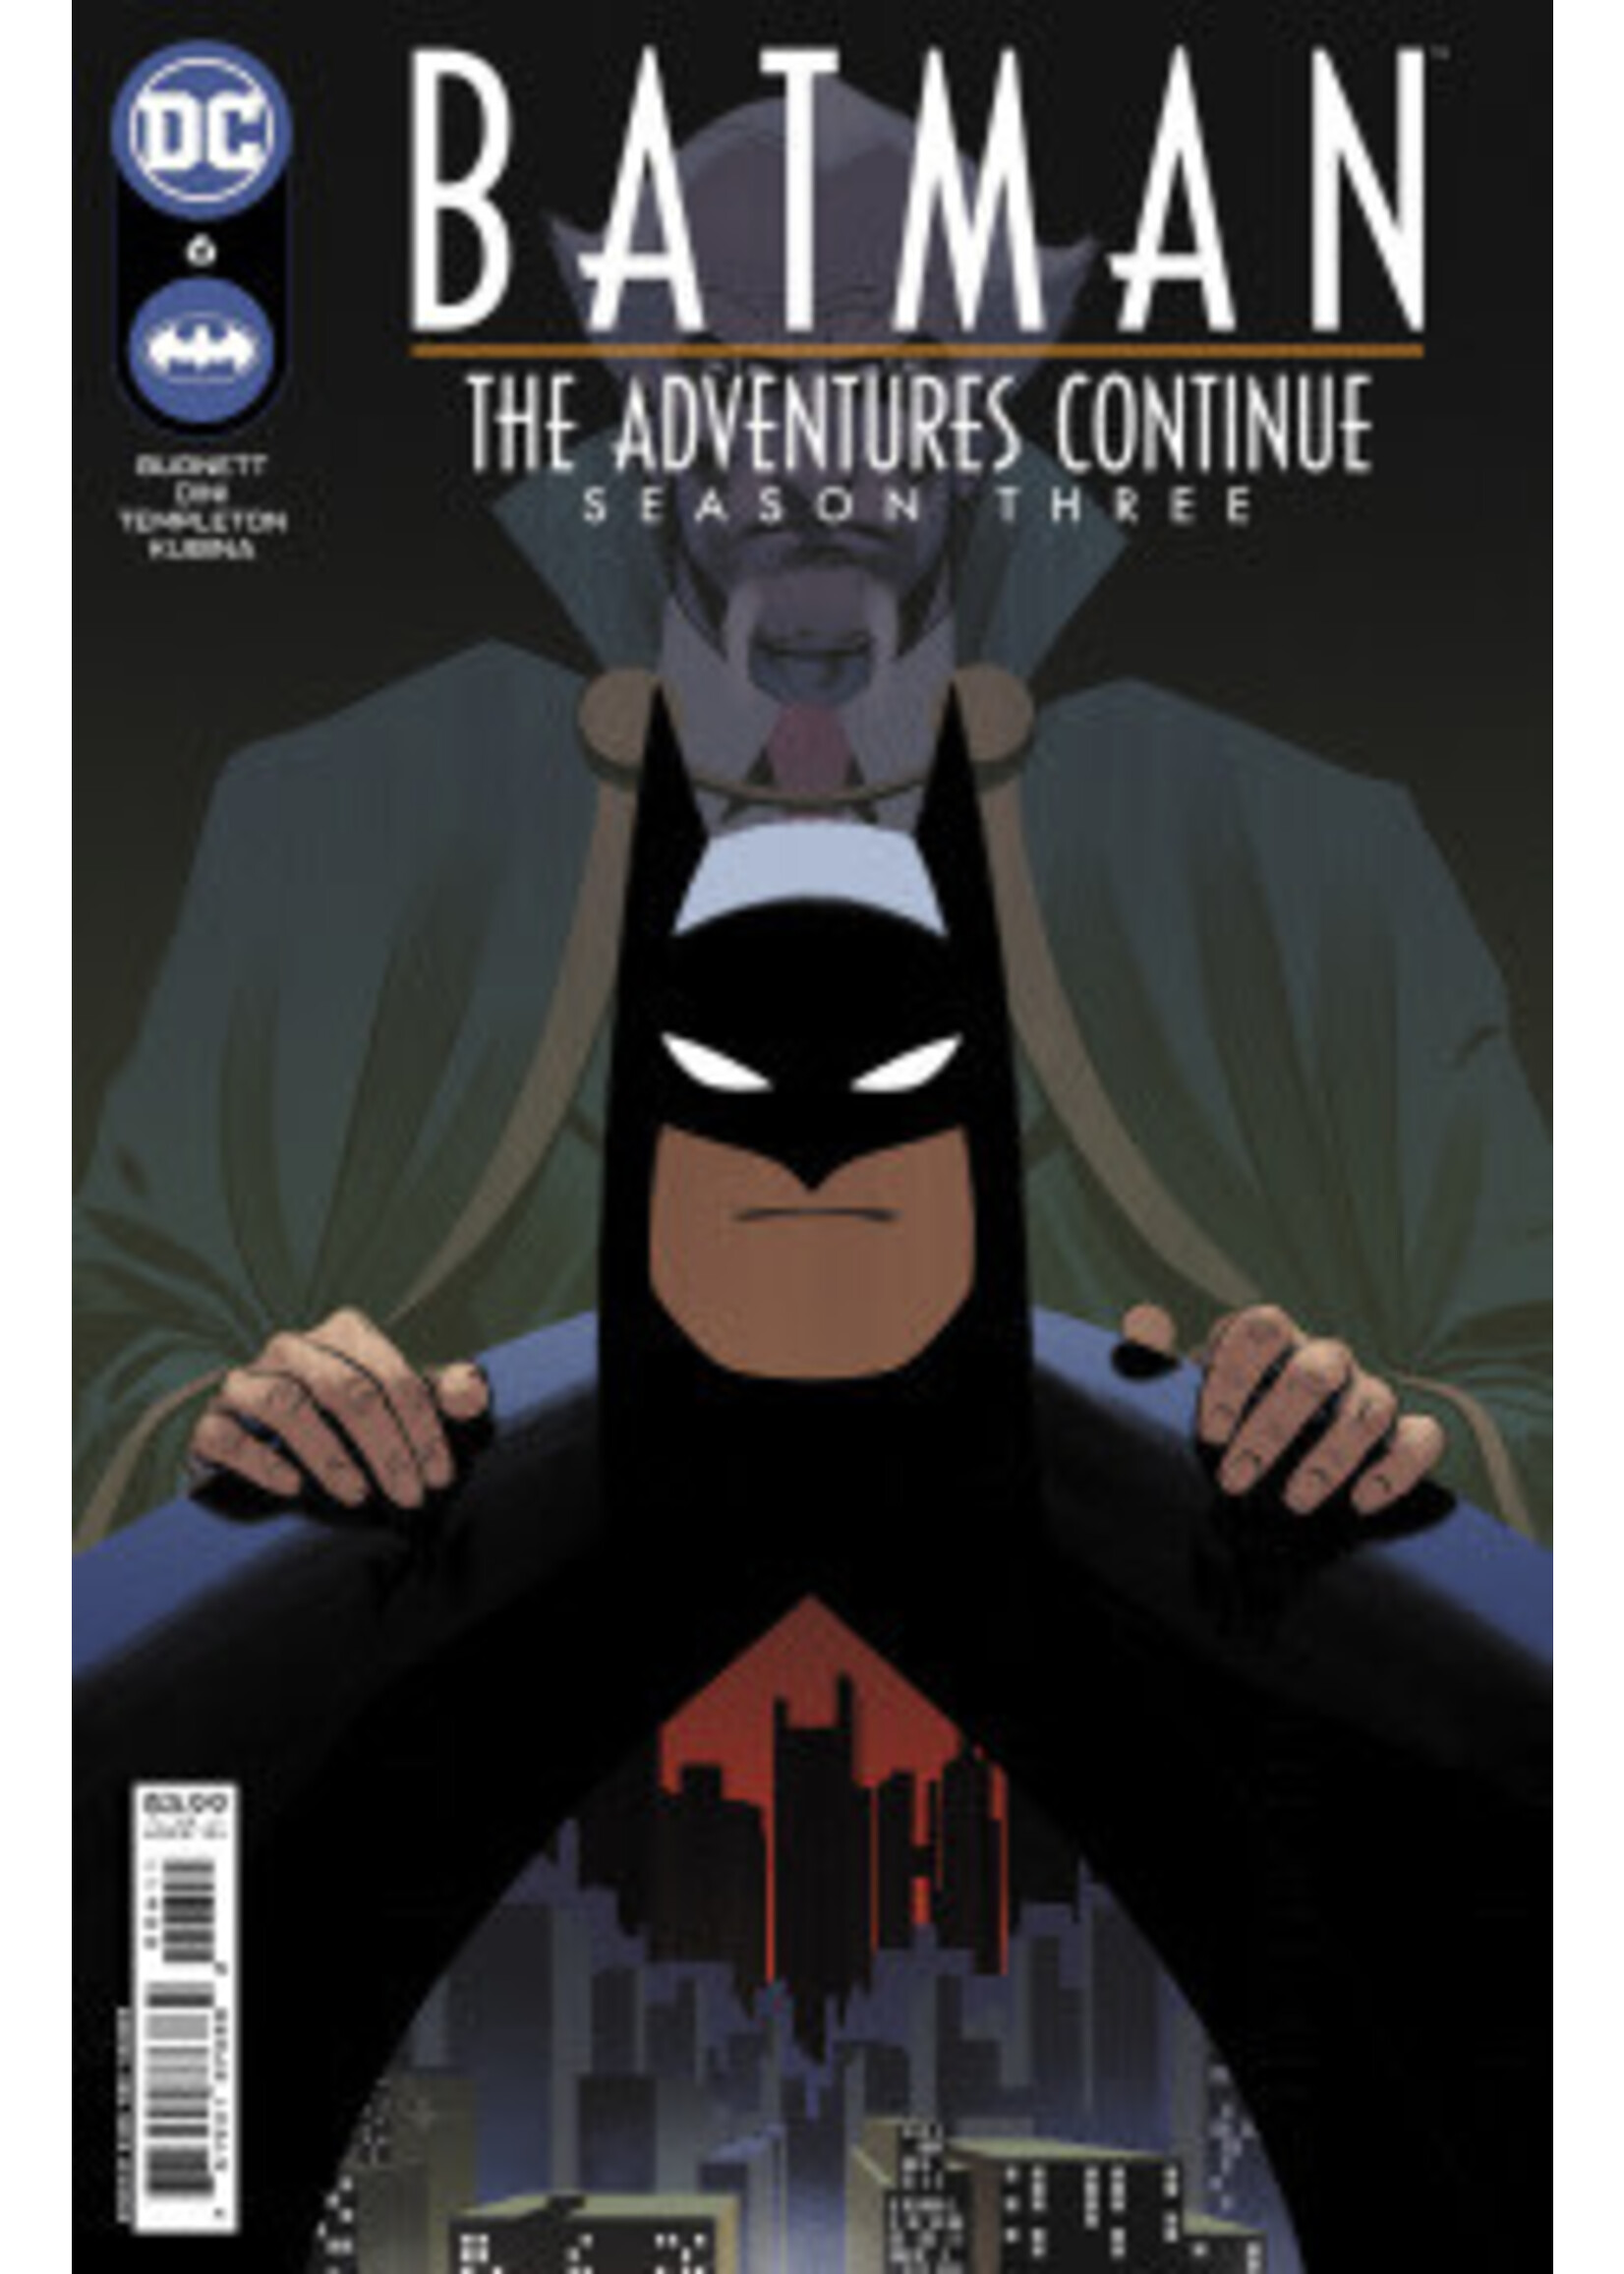 DC COMICS BATMAN ADVENTURES CONTINUE SEASON 3 complete 8 issue series